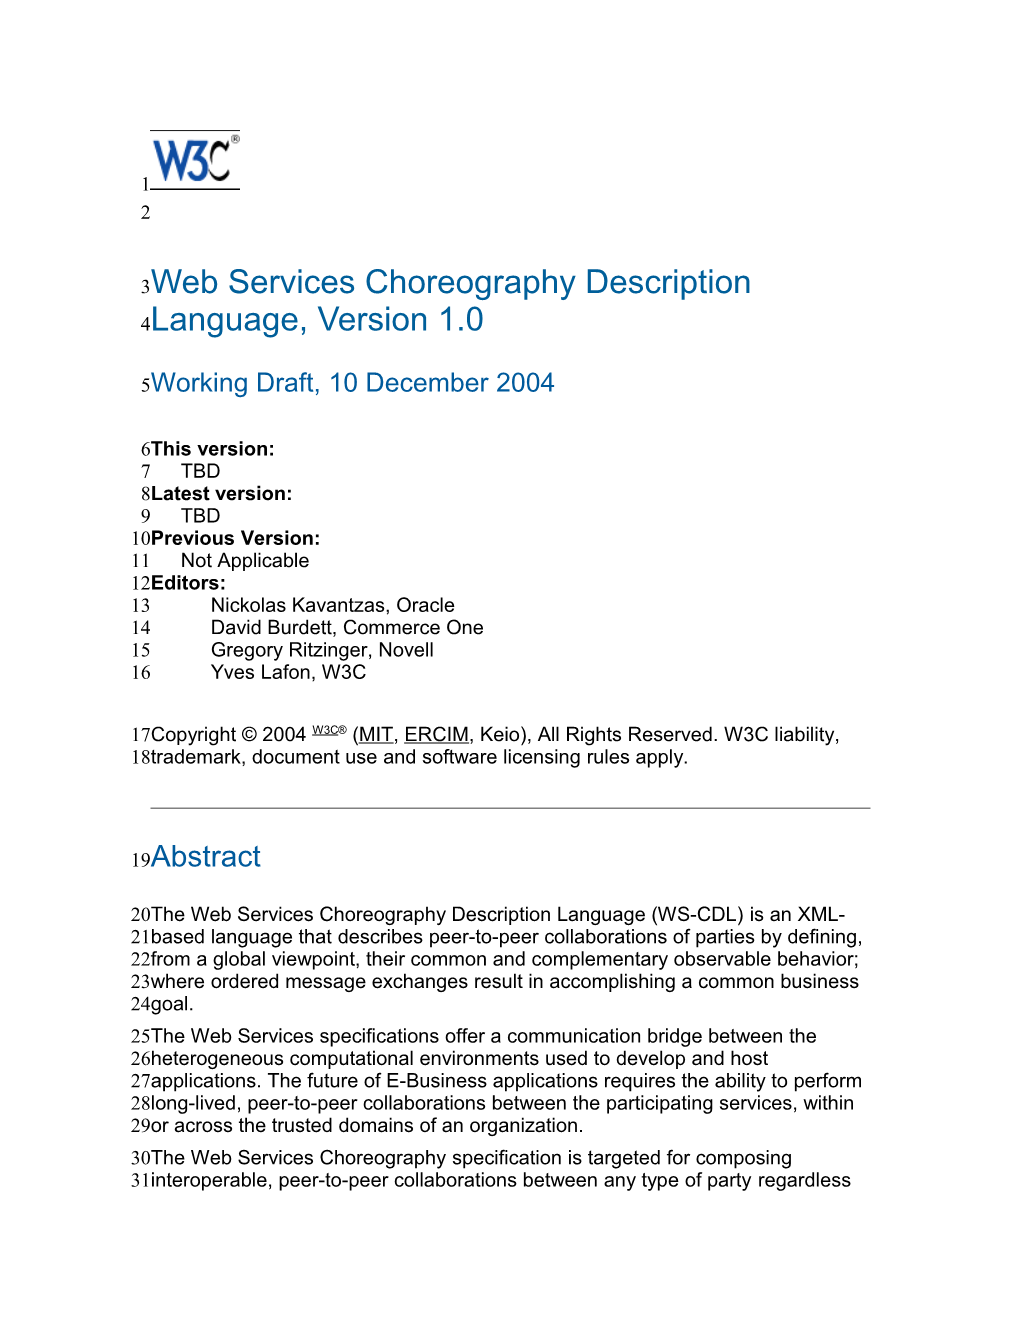 Web Services Choreography Description Language, Version 1.0